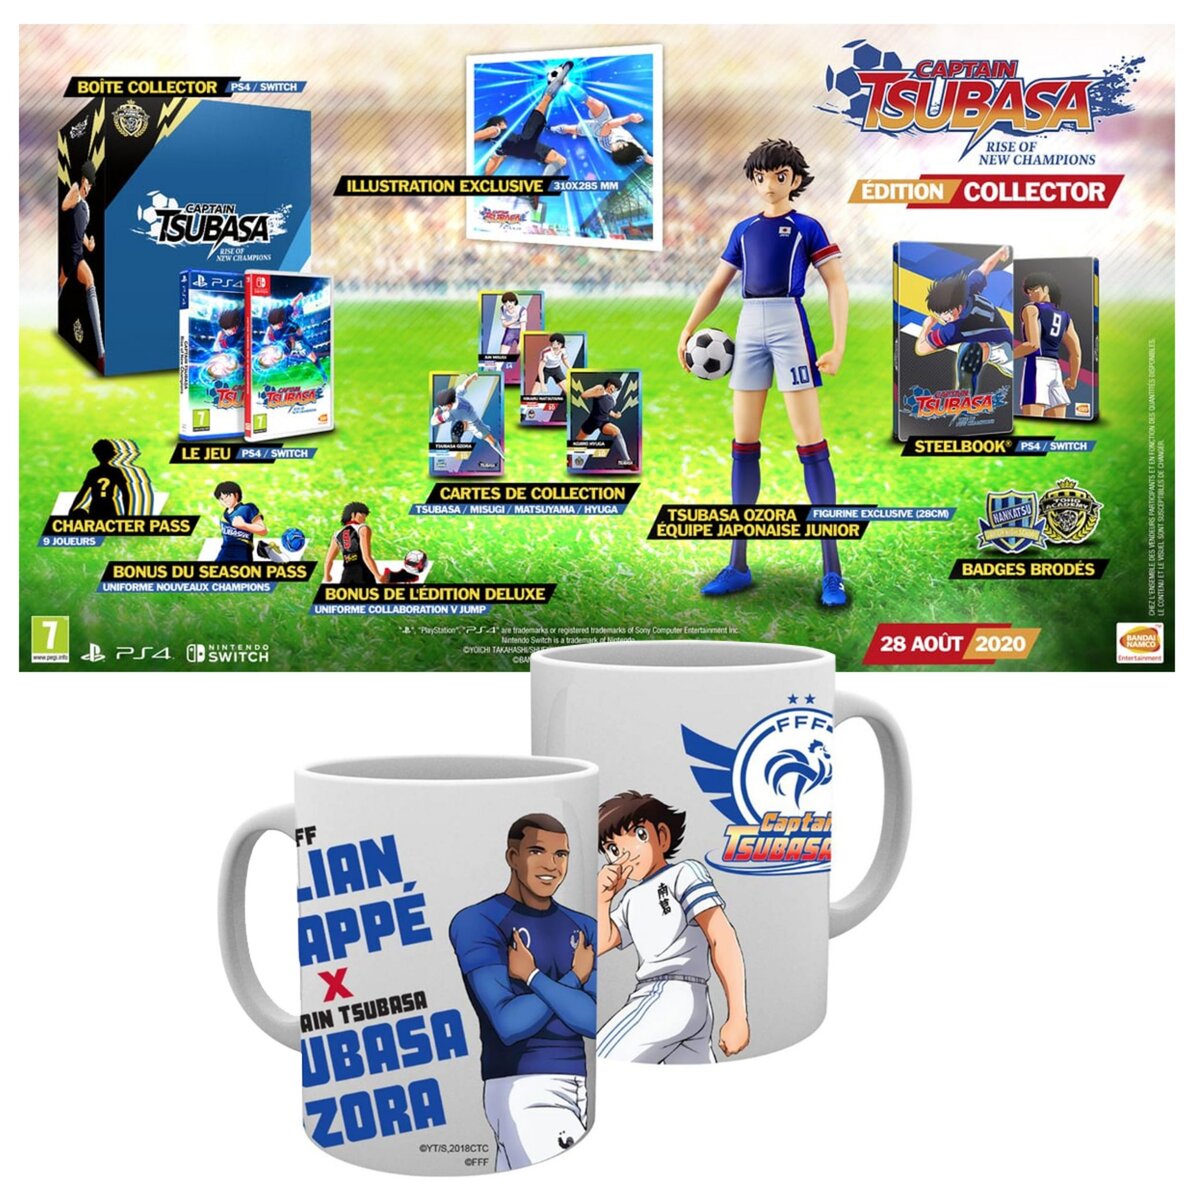 Captain Tsubasa Edition Collector Nintendo Switch + Mug Mbappe